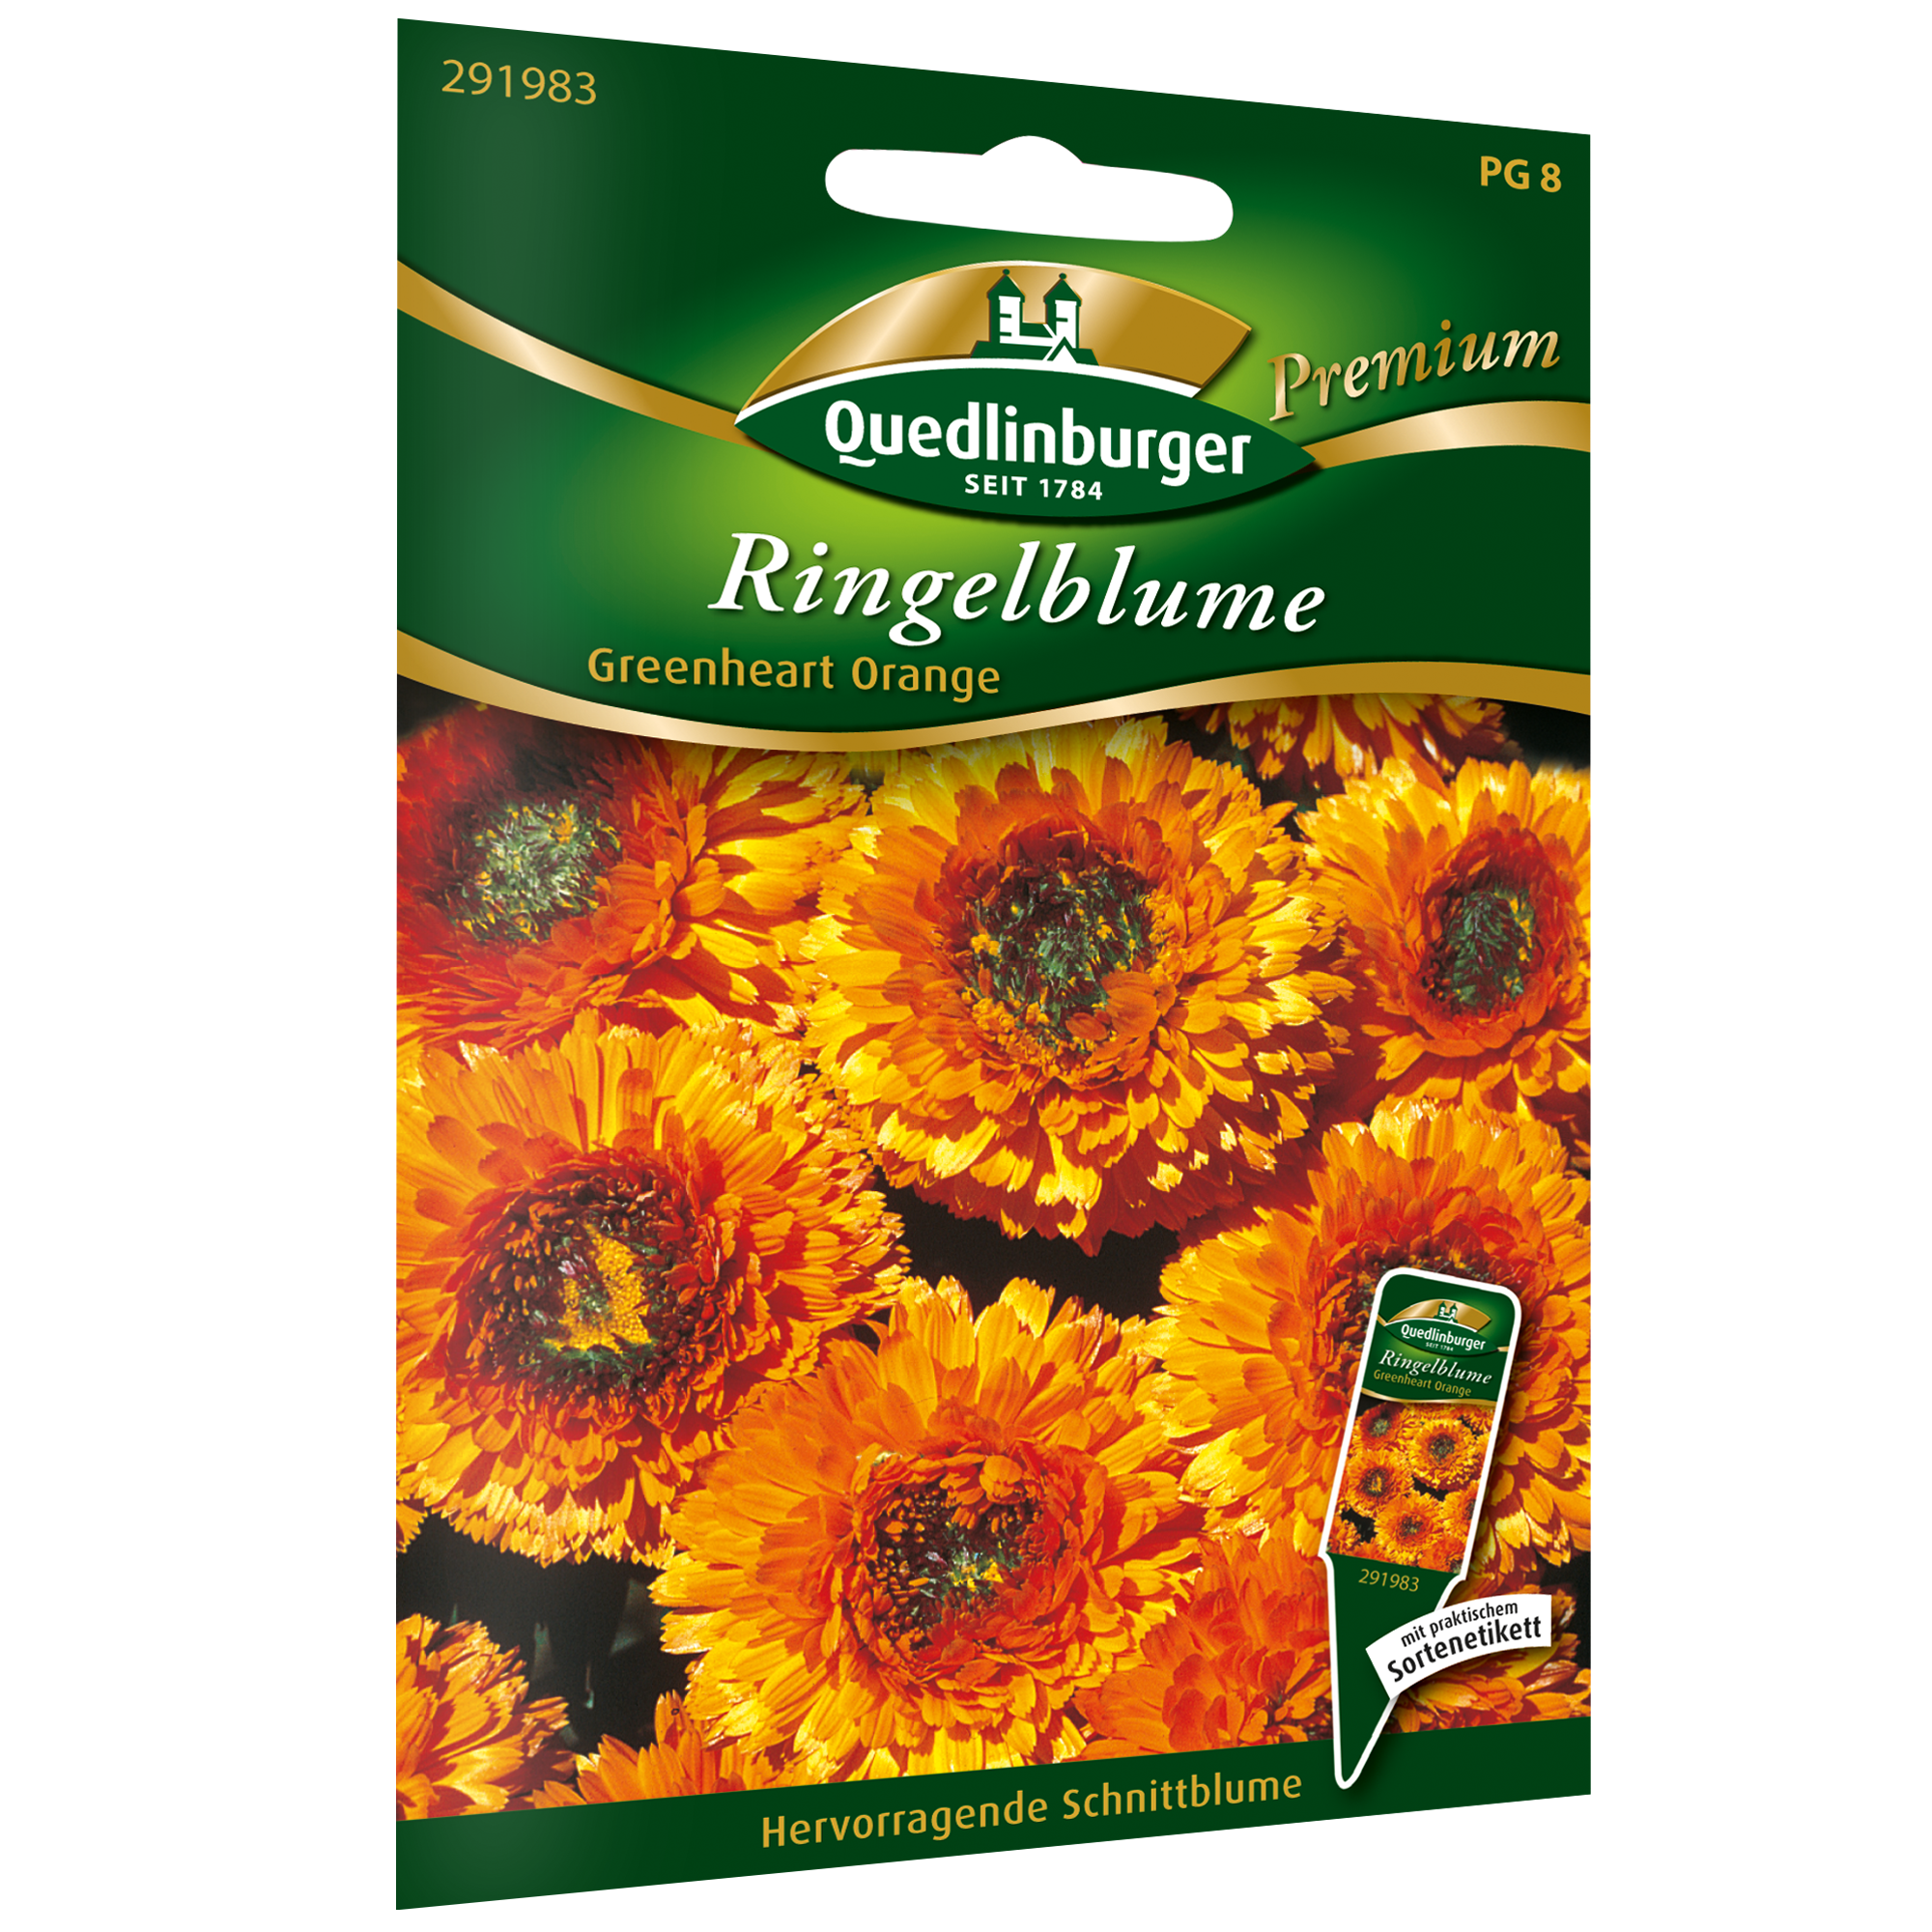 Ringelblume 'Greenheart Orange' + product picture